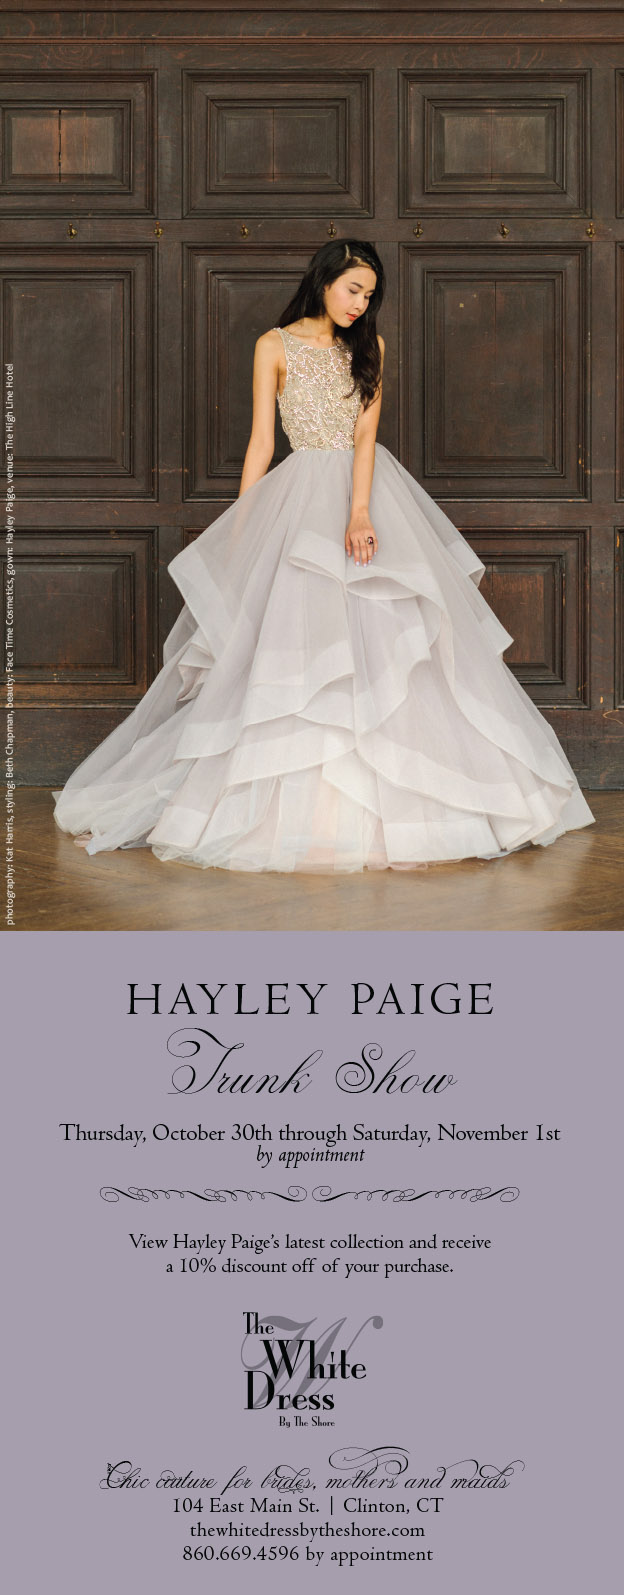 October 30 - November 1: Hayley Paige Trunk Show. Desktop Image